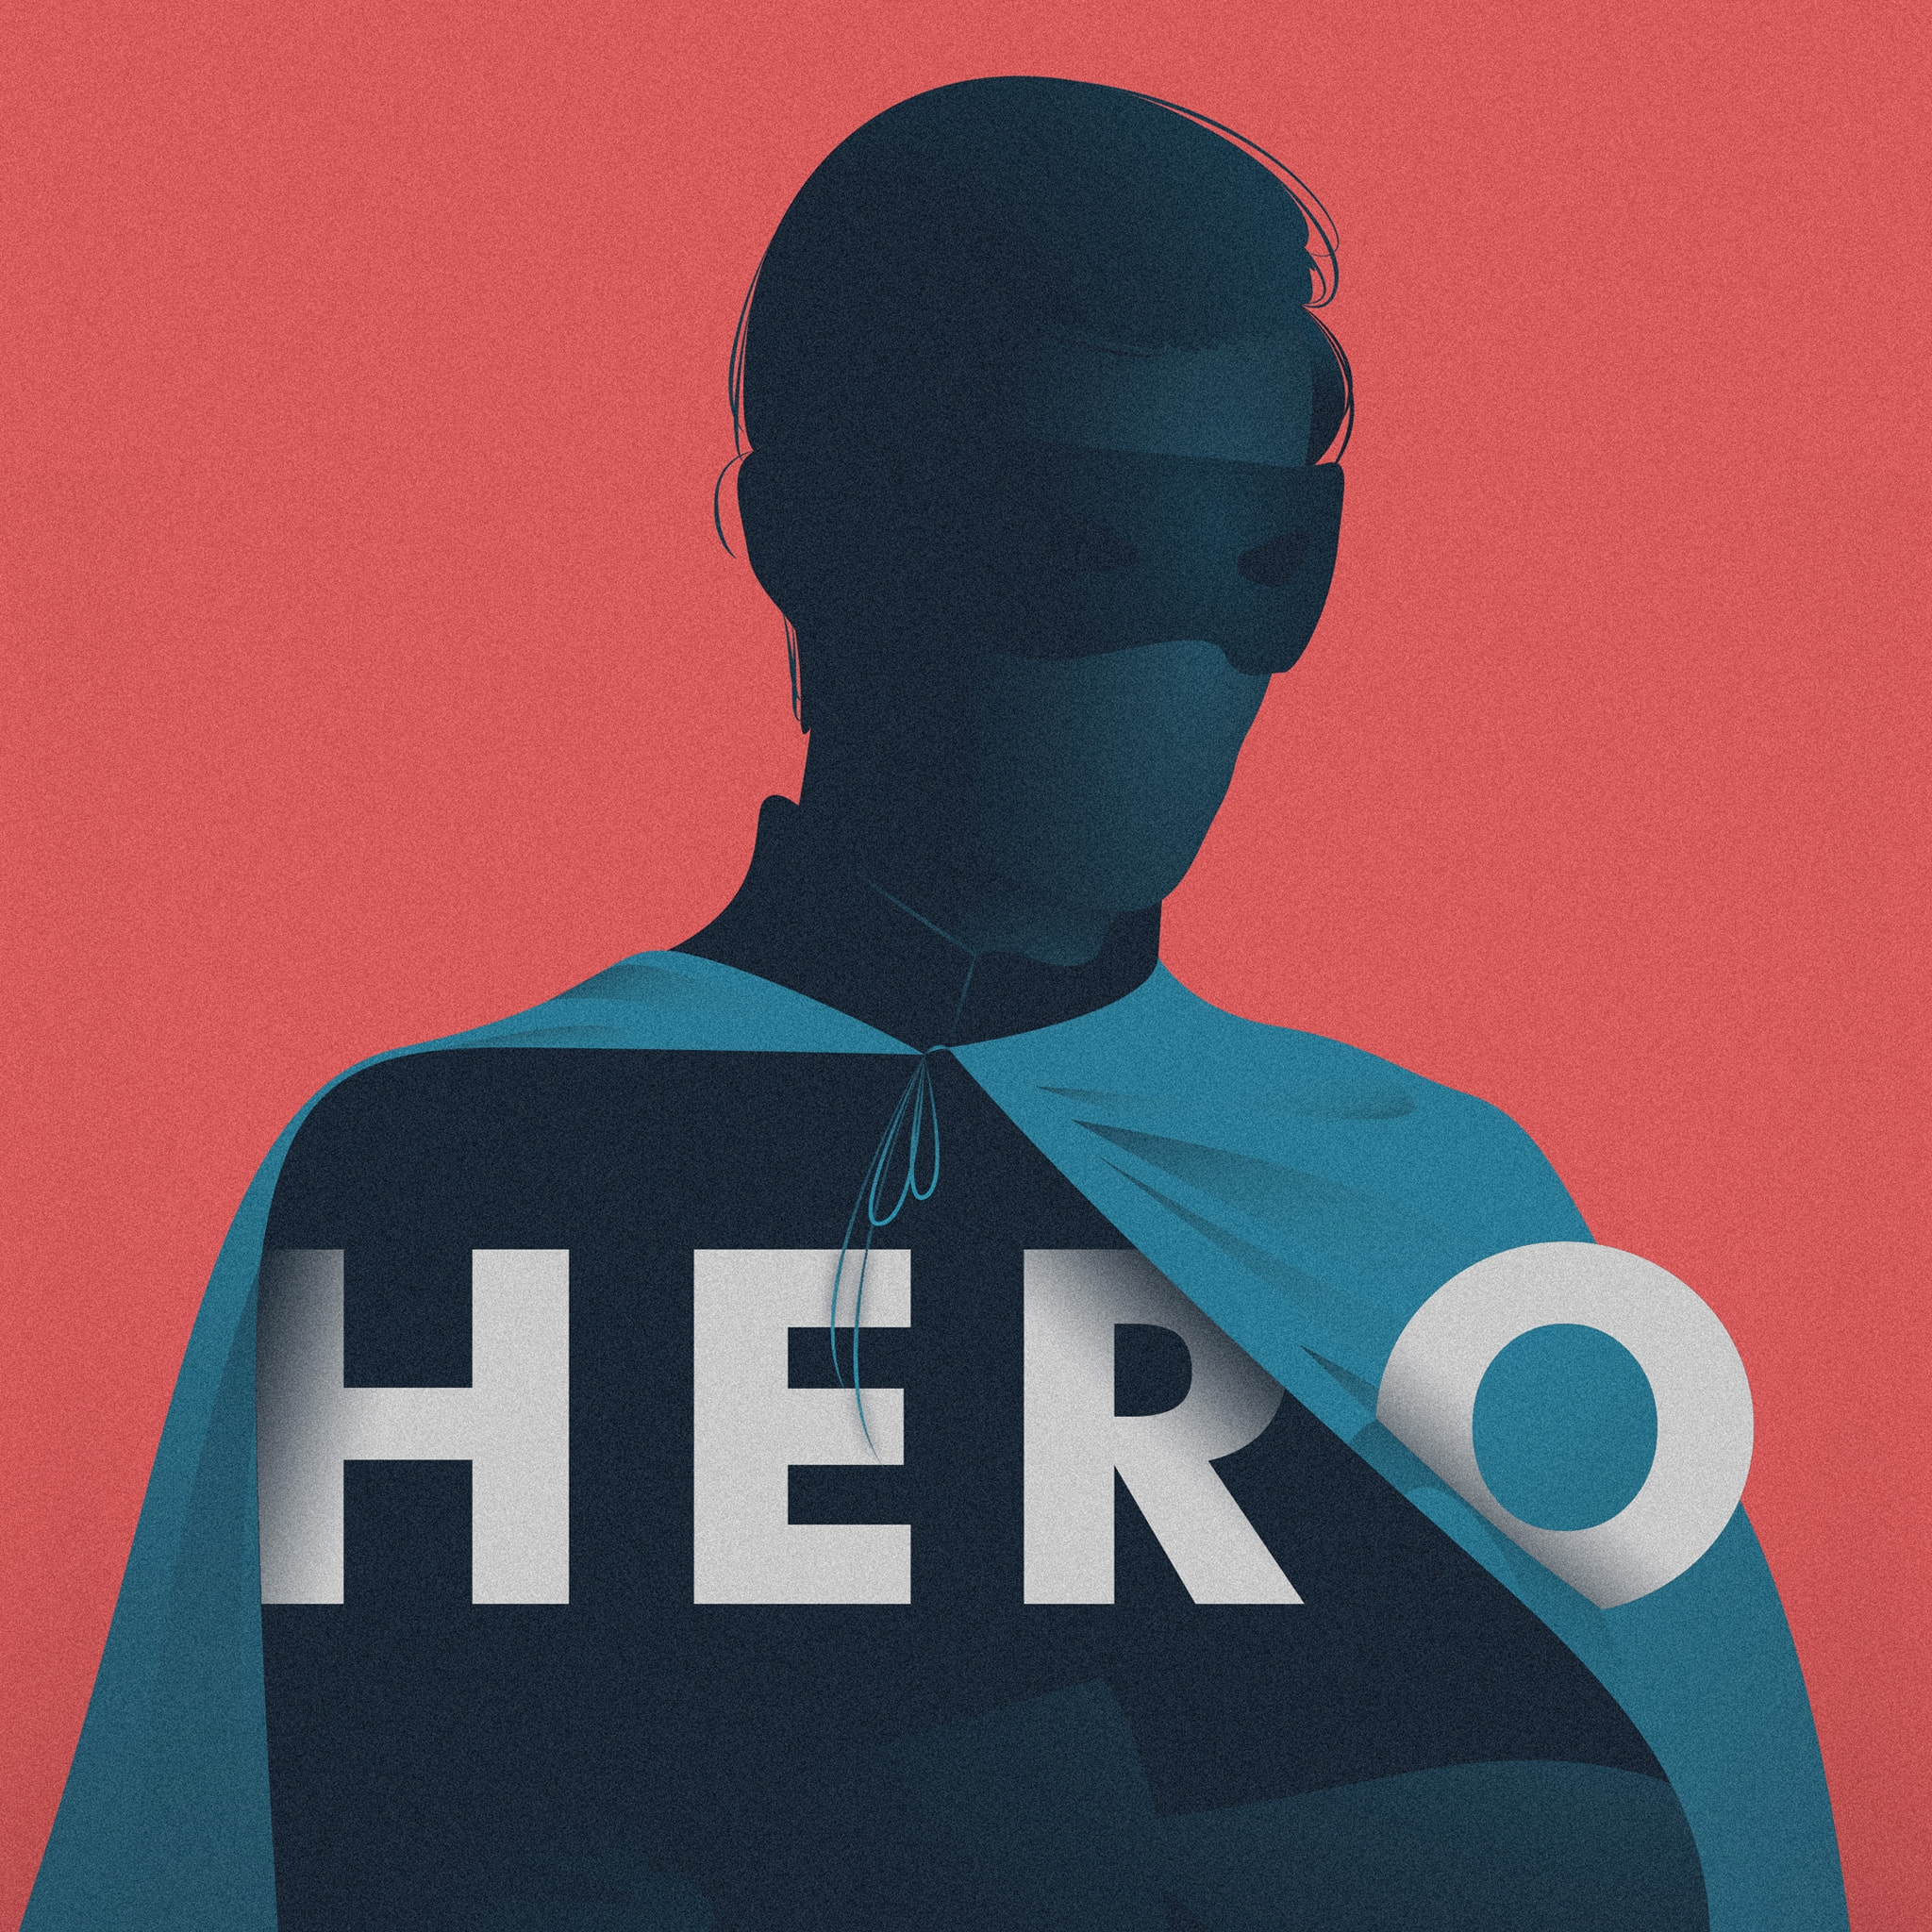 Hero Ipad タブレット壁紙ギャラリー